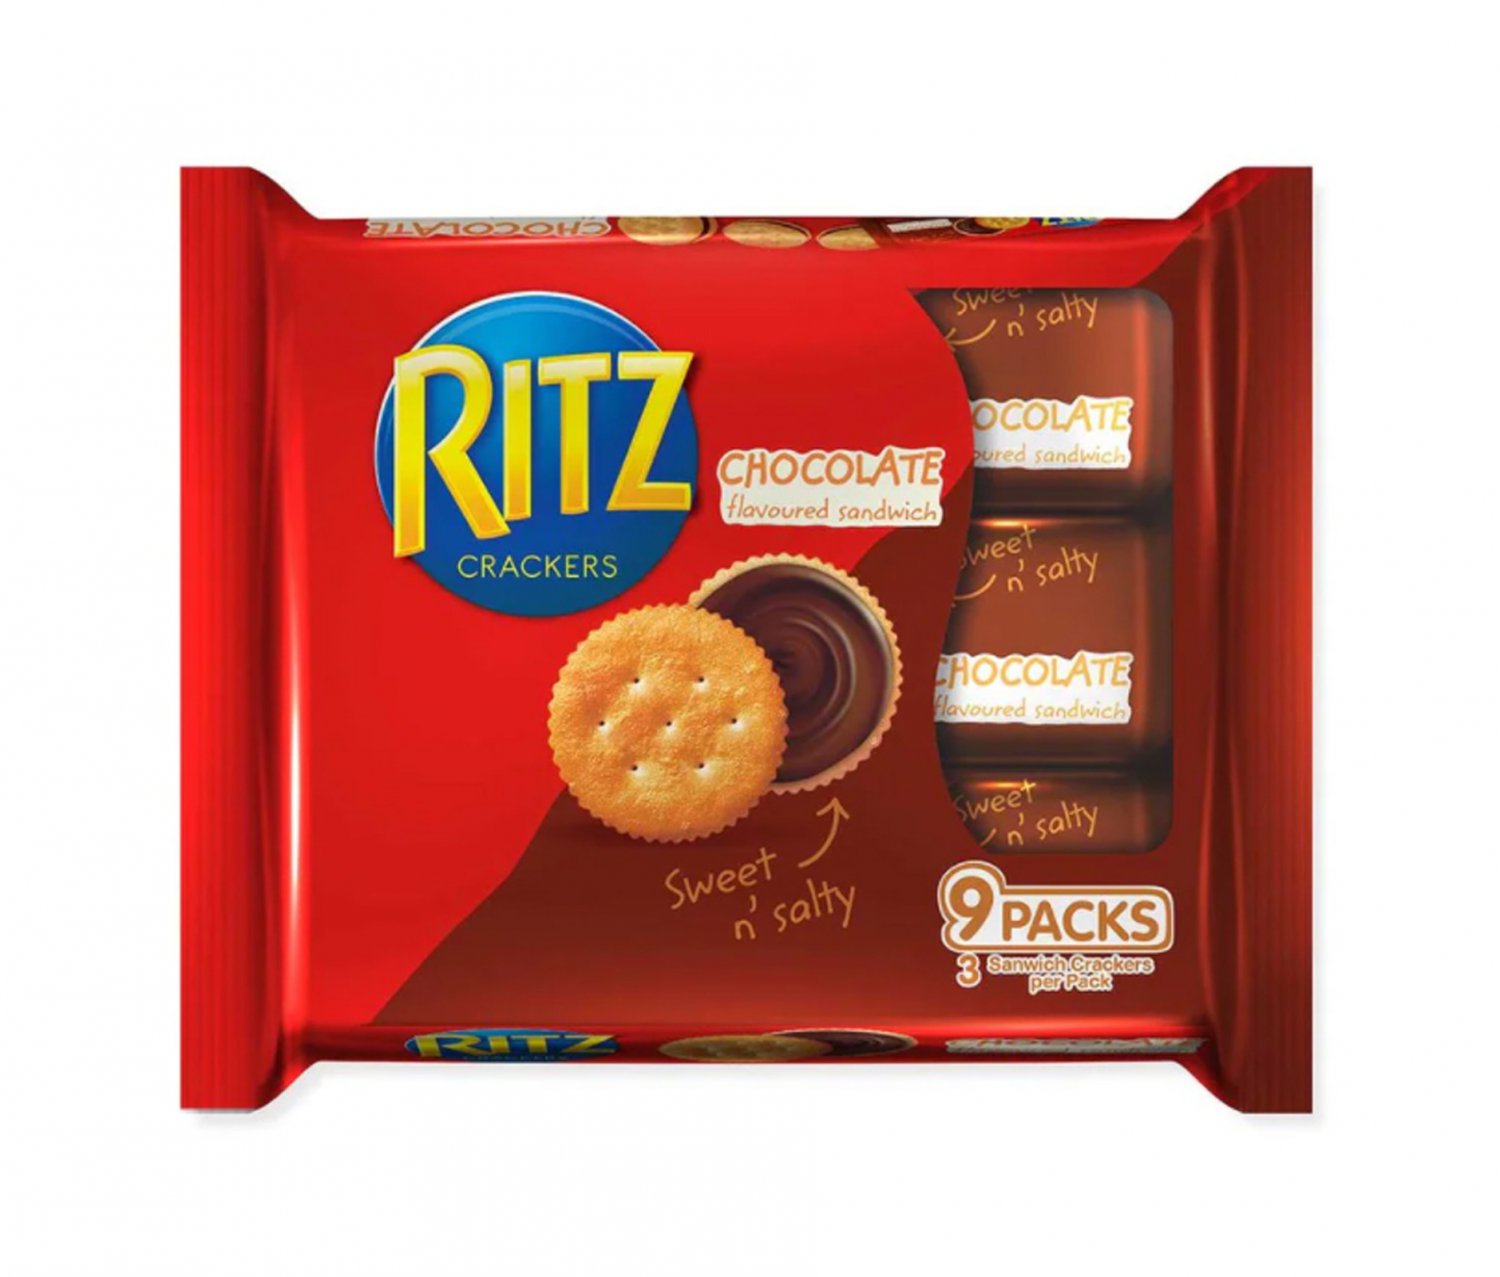 Ritz Family Pack Chocolate Flavor Sandwich Biscuit Cookies sweets treats snacks